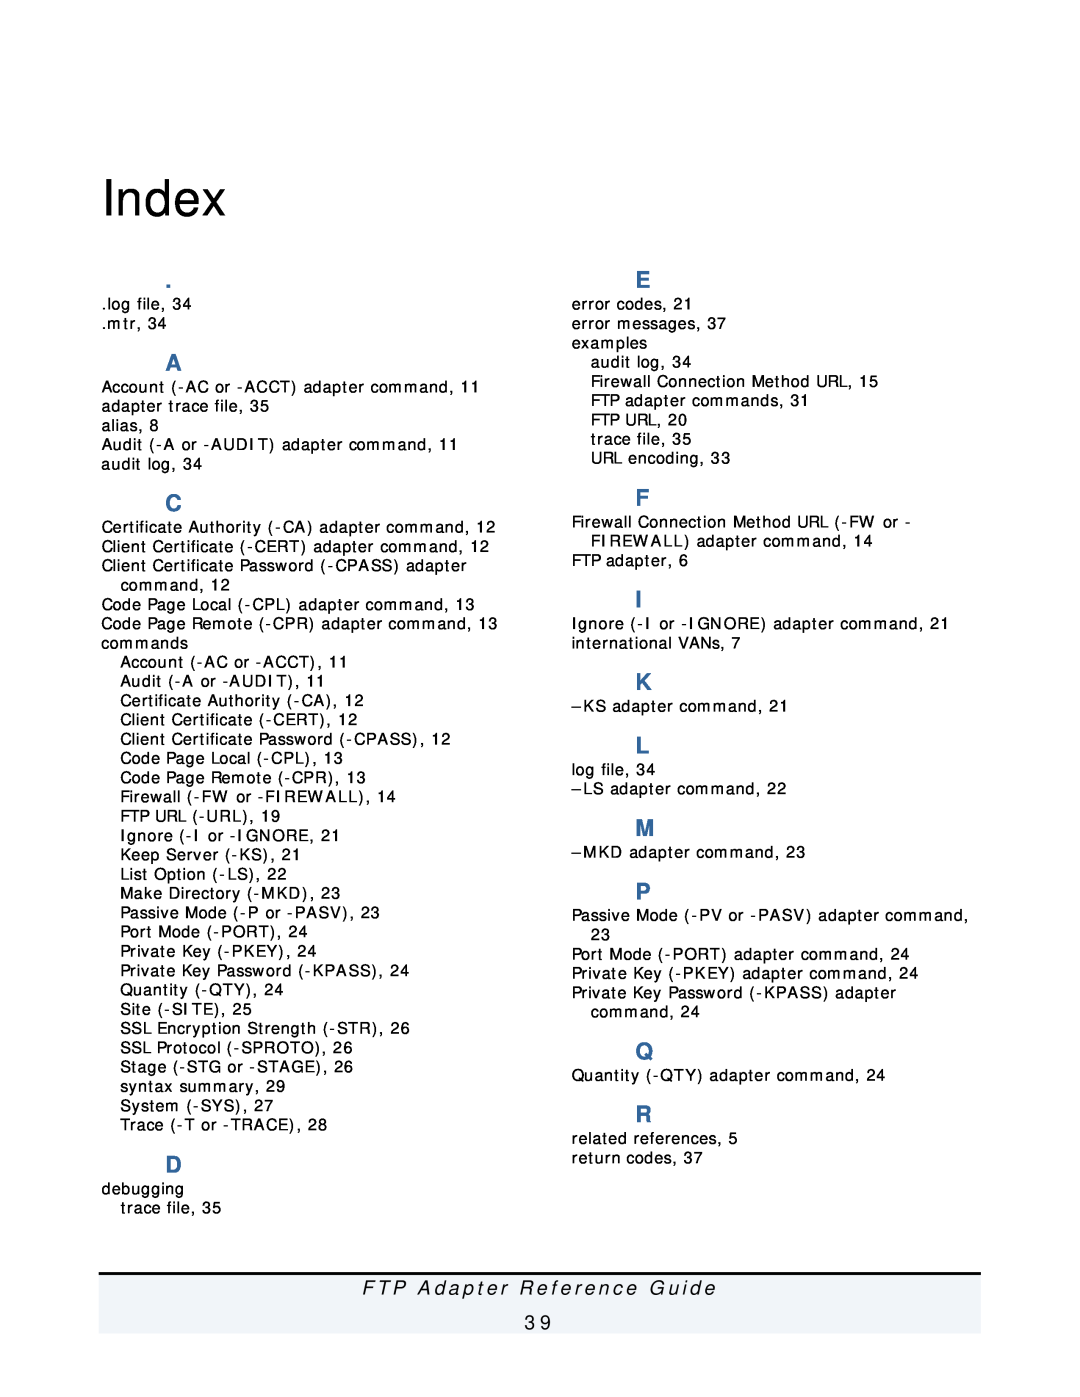 IBM FTP Adapter manual Index 